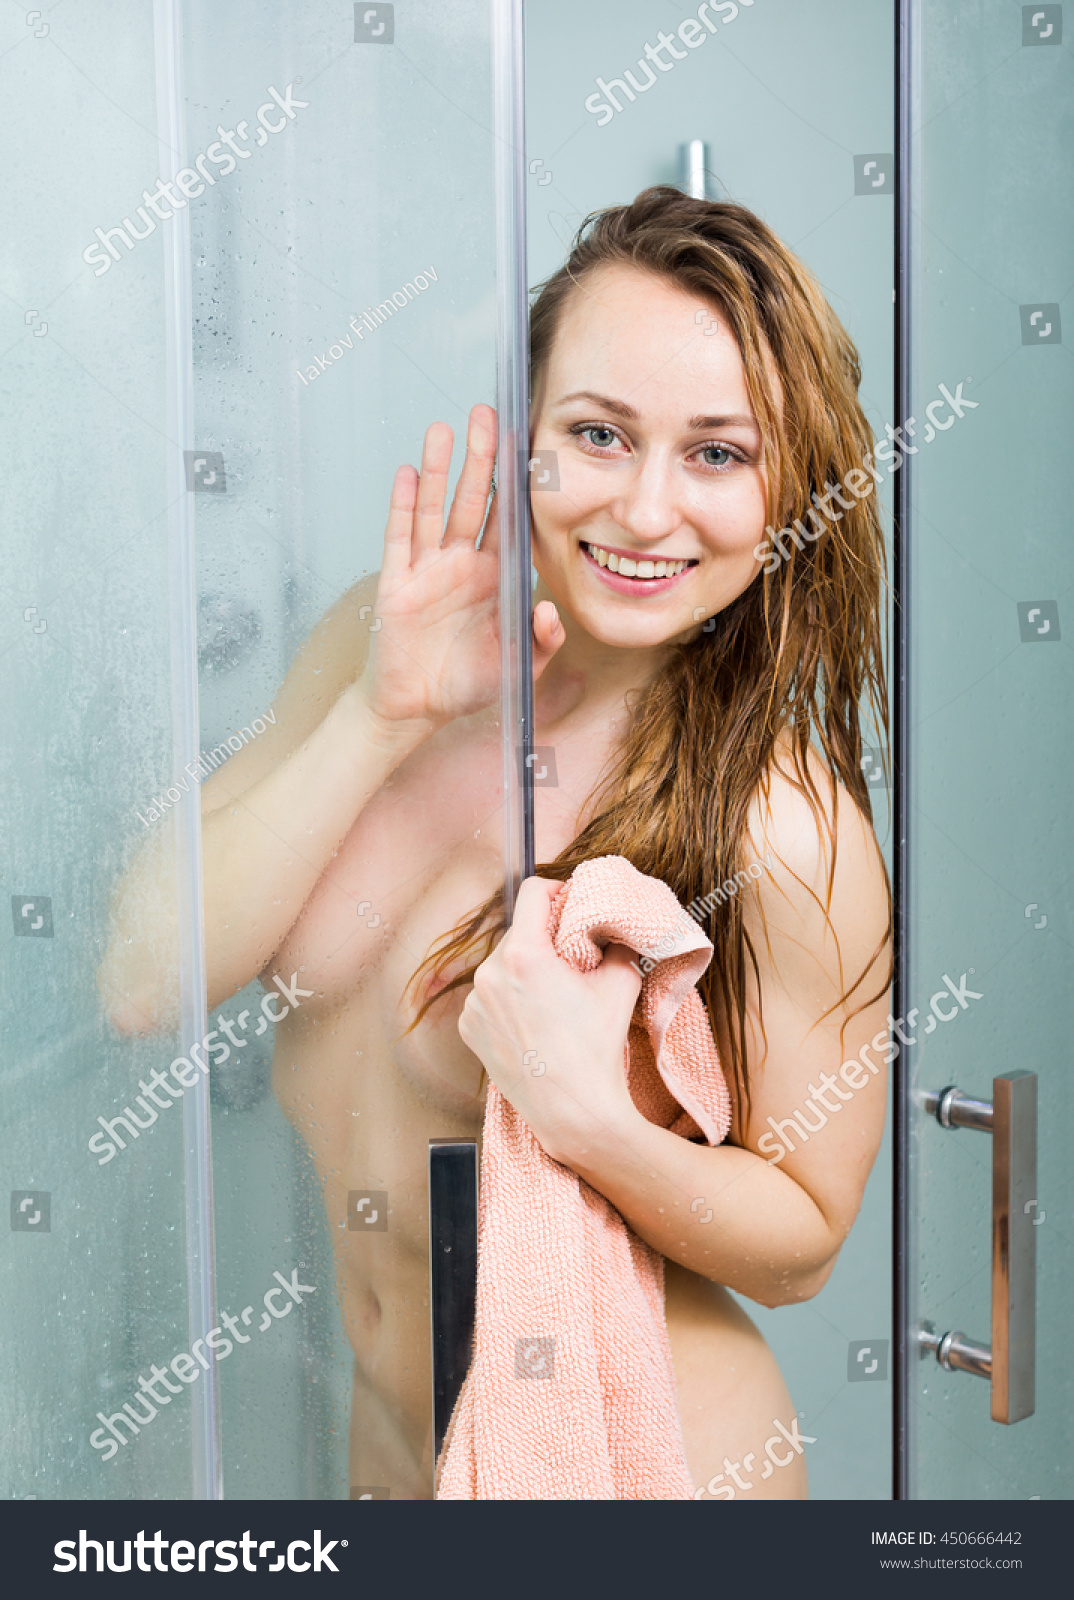 Hot Naked Women In The Shower